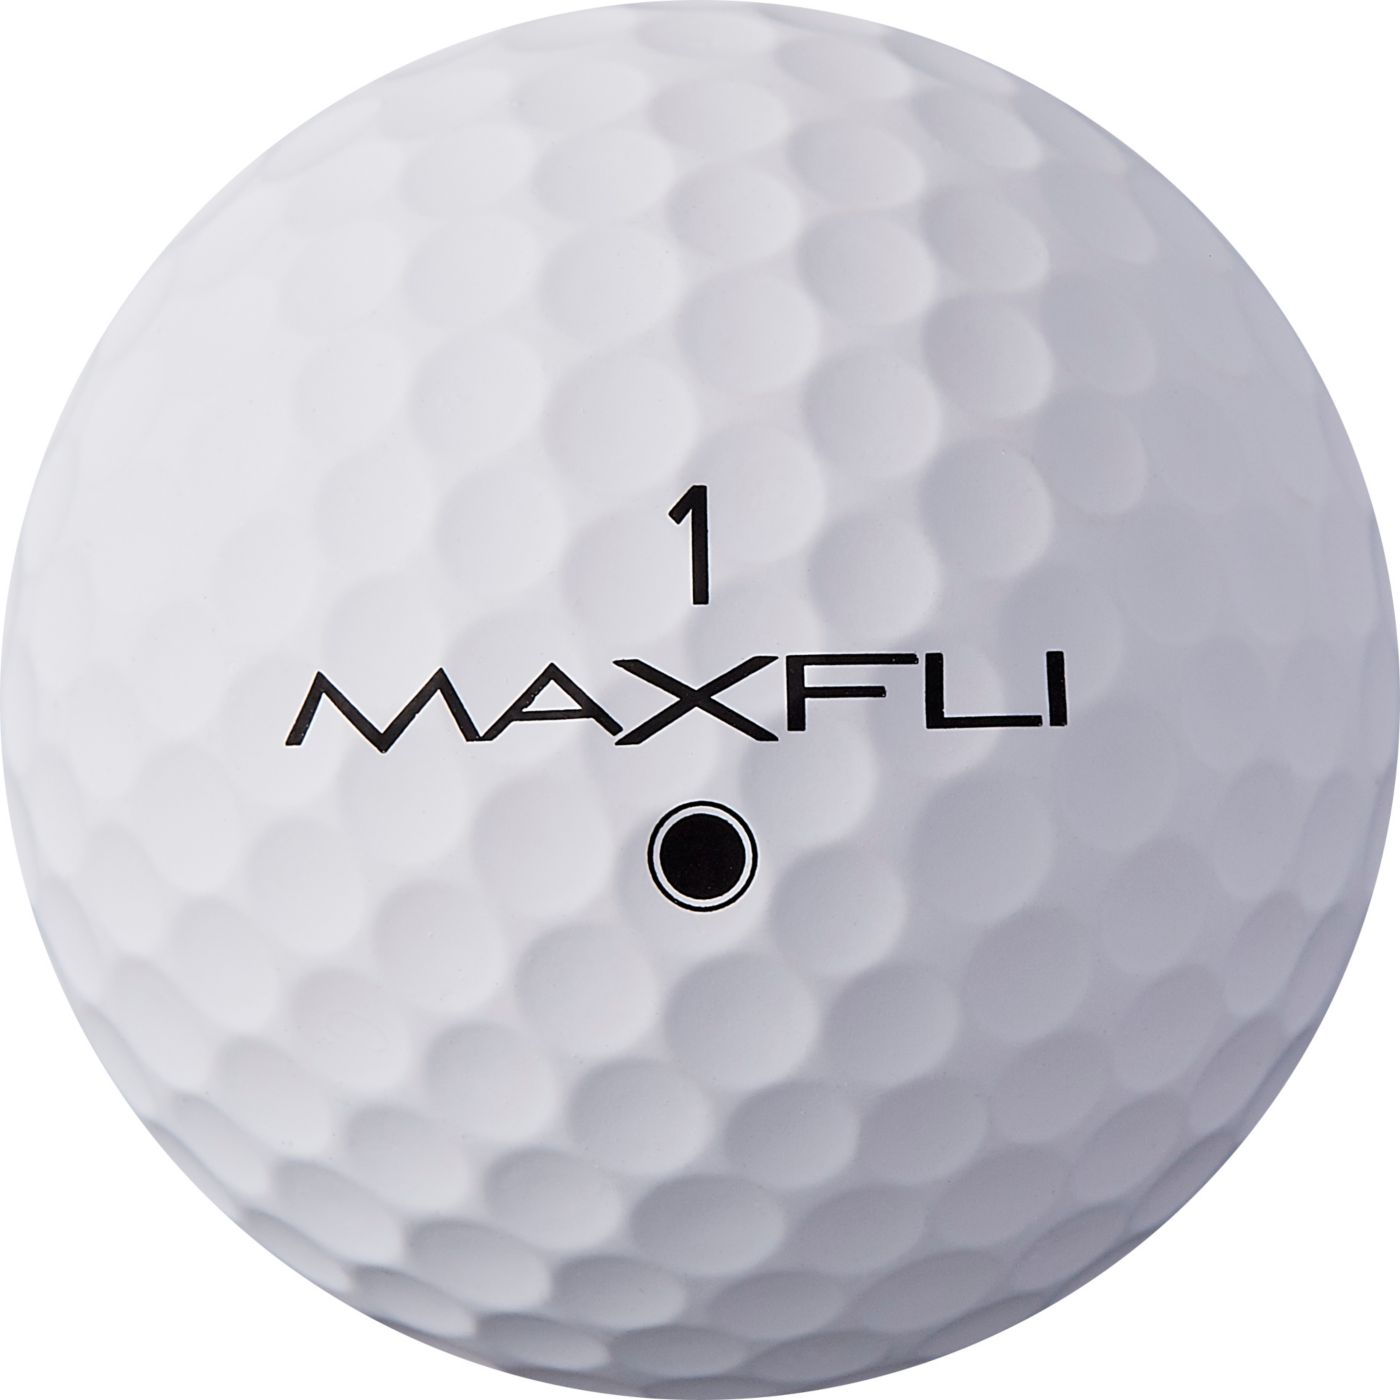 buy maxfli tour golf balls